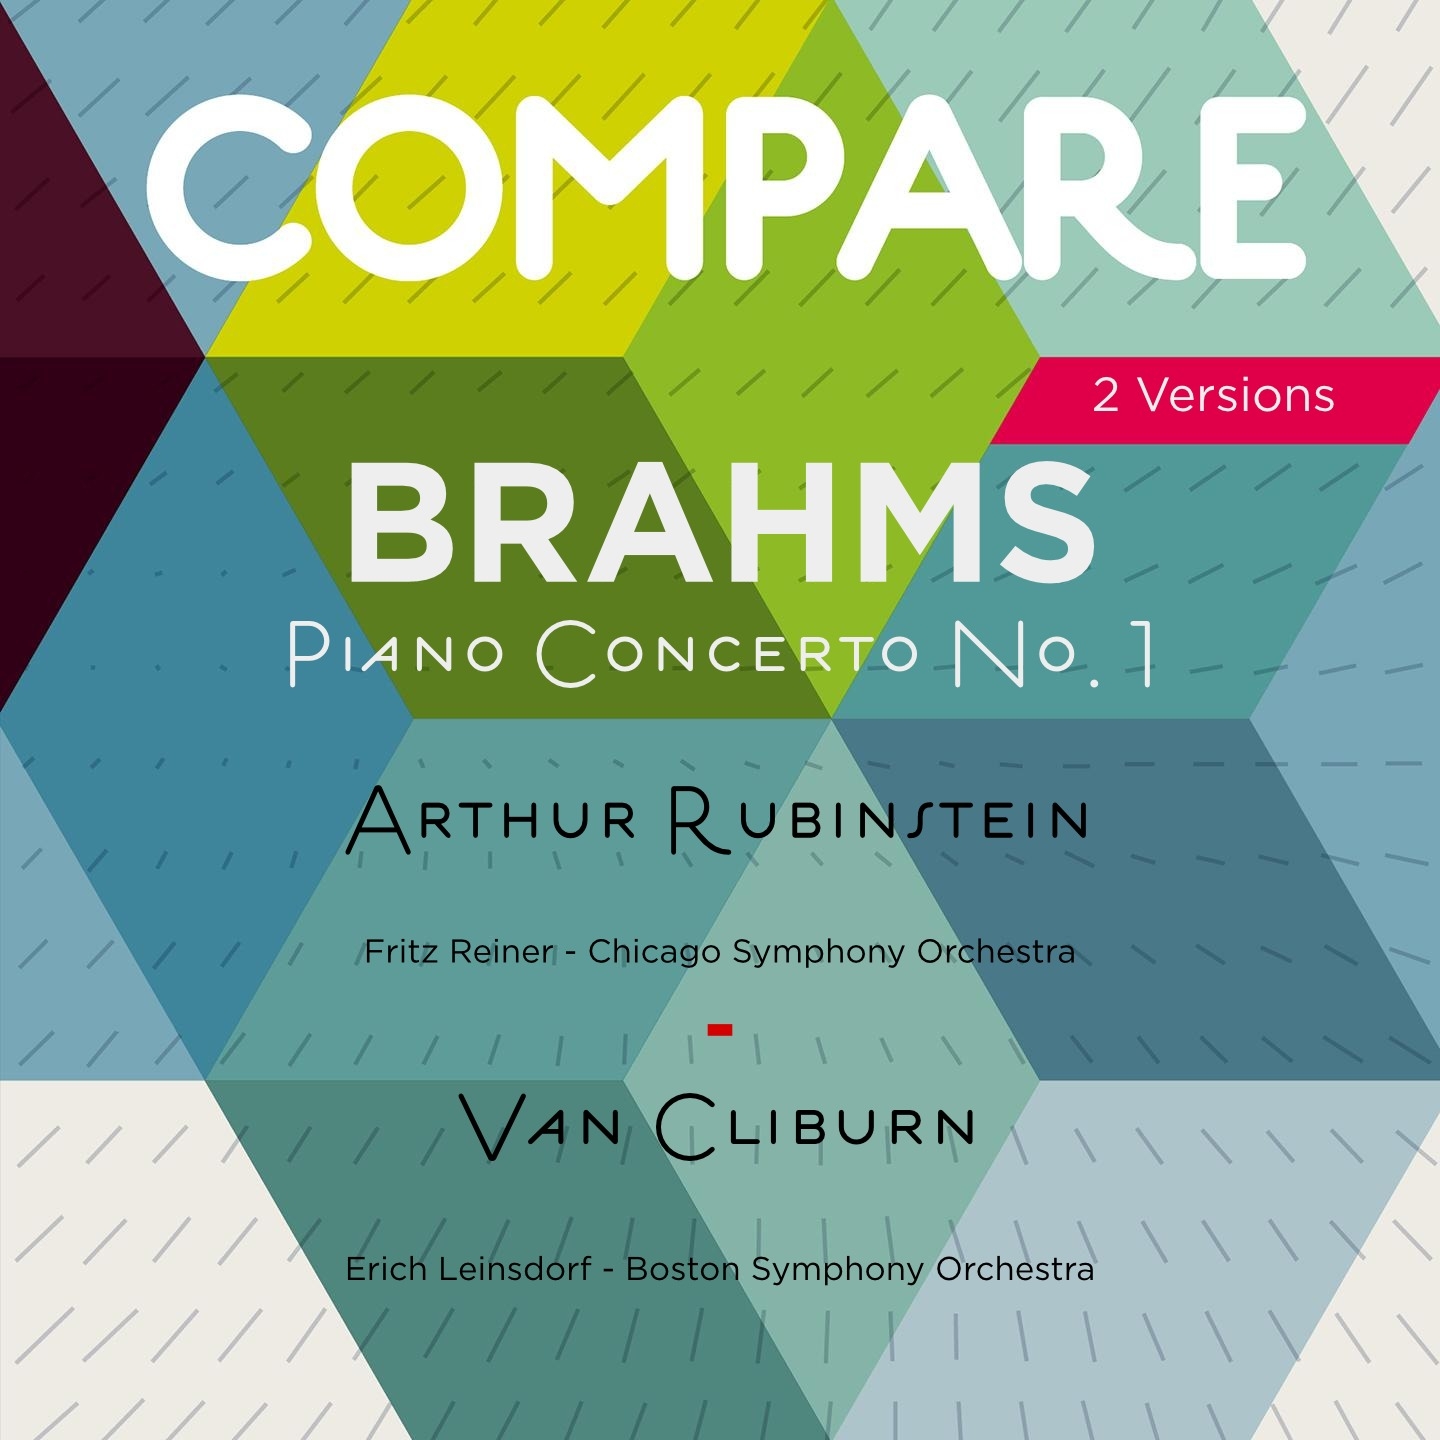 Brahms: Piano Concerto No. 1, Arthur Rubinstein vs. Van Cliburn